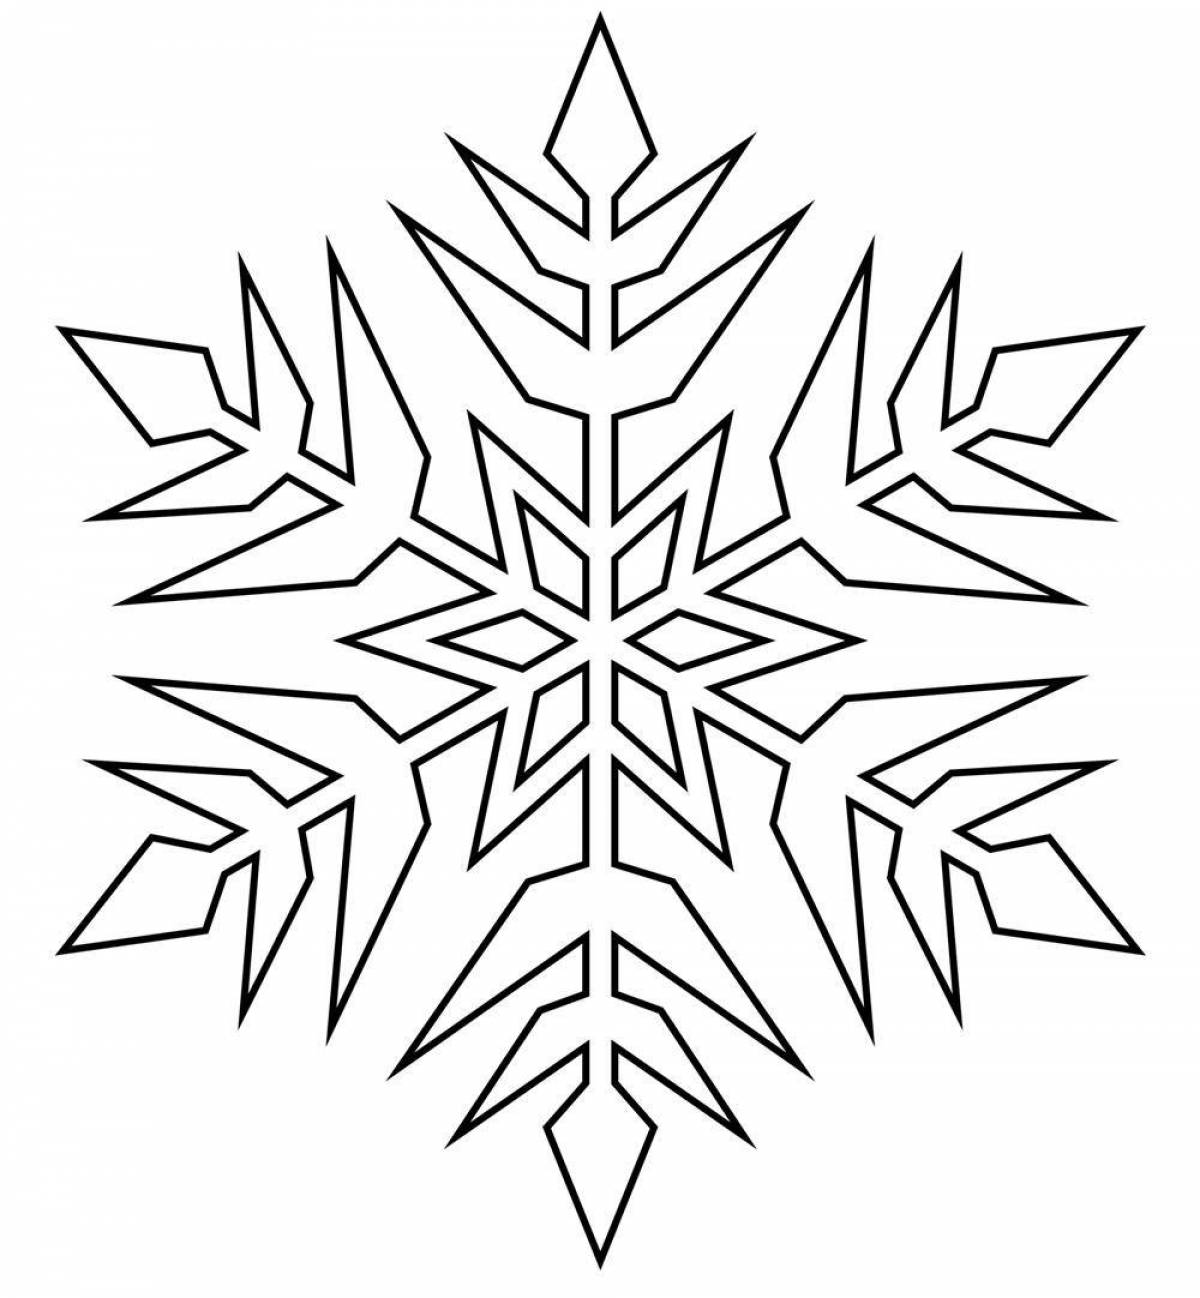 Wonderful Christmas snowflake coloring book